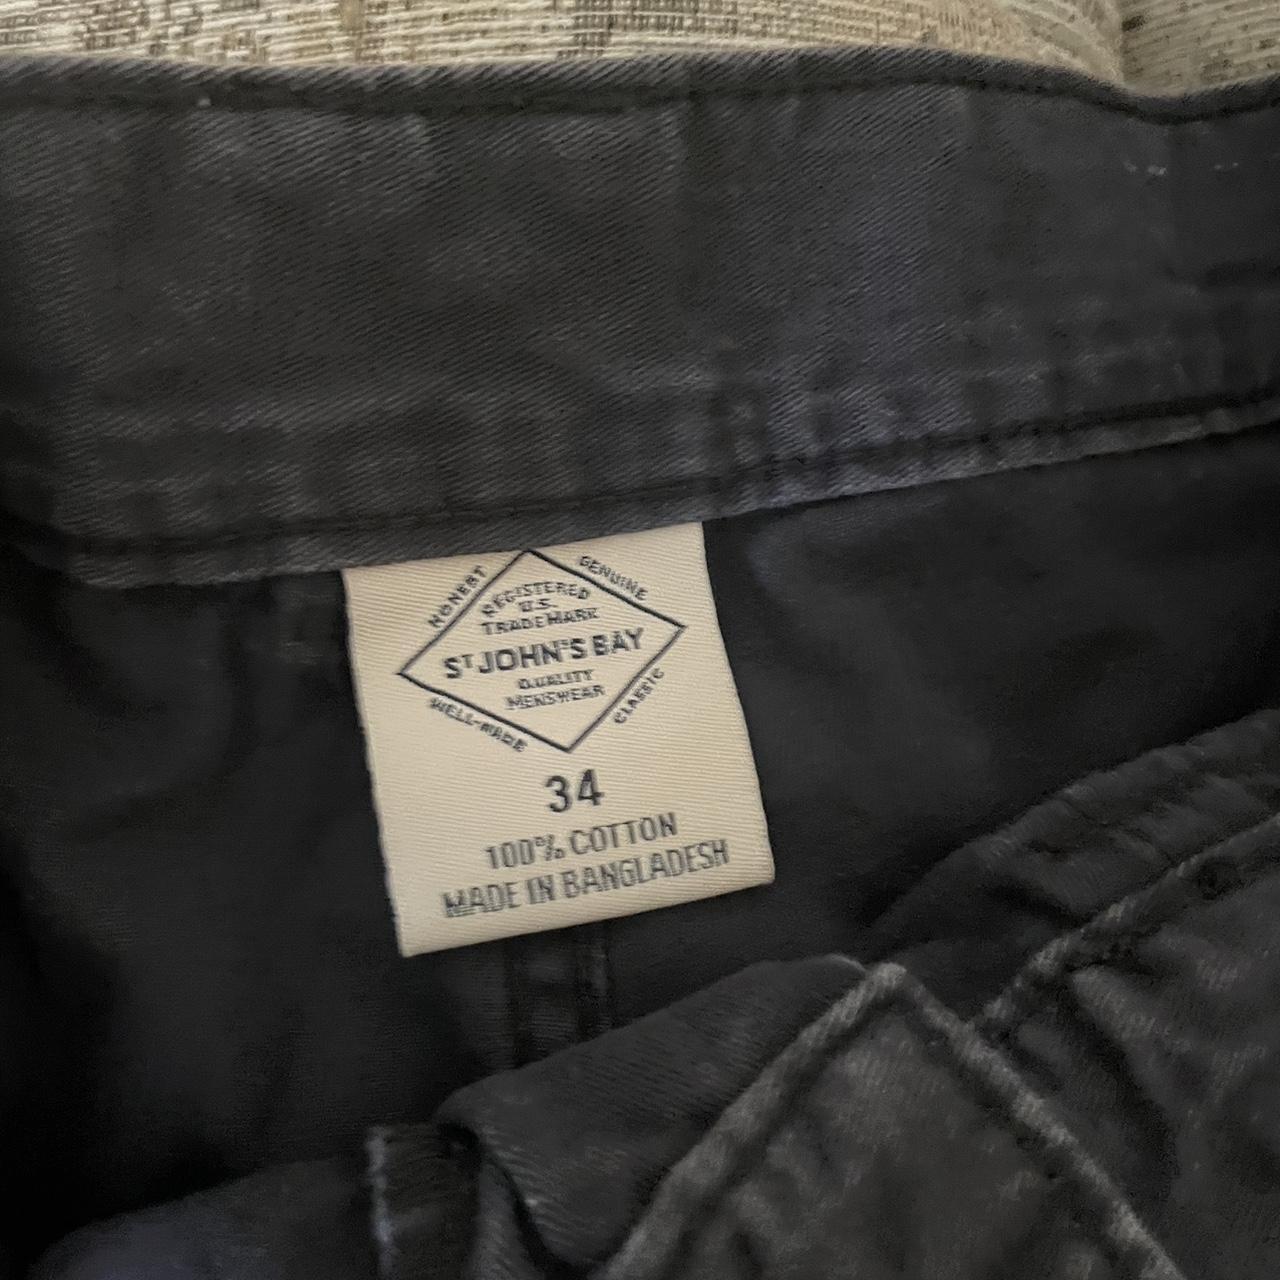 St. John’s bay black cargo shorts size 34 no paypal - Depop